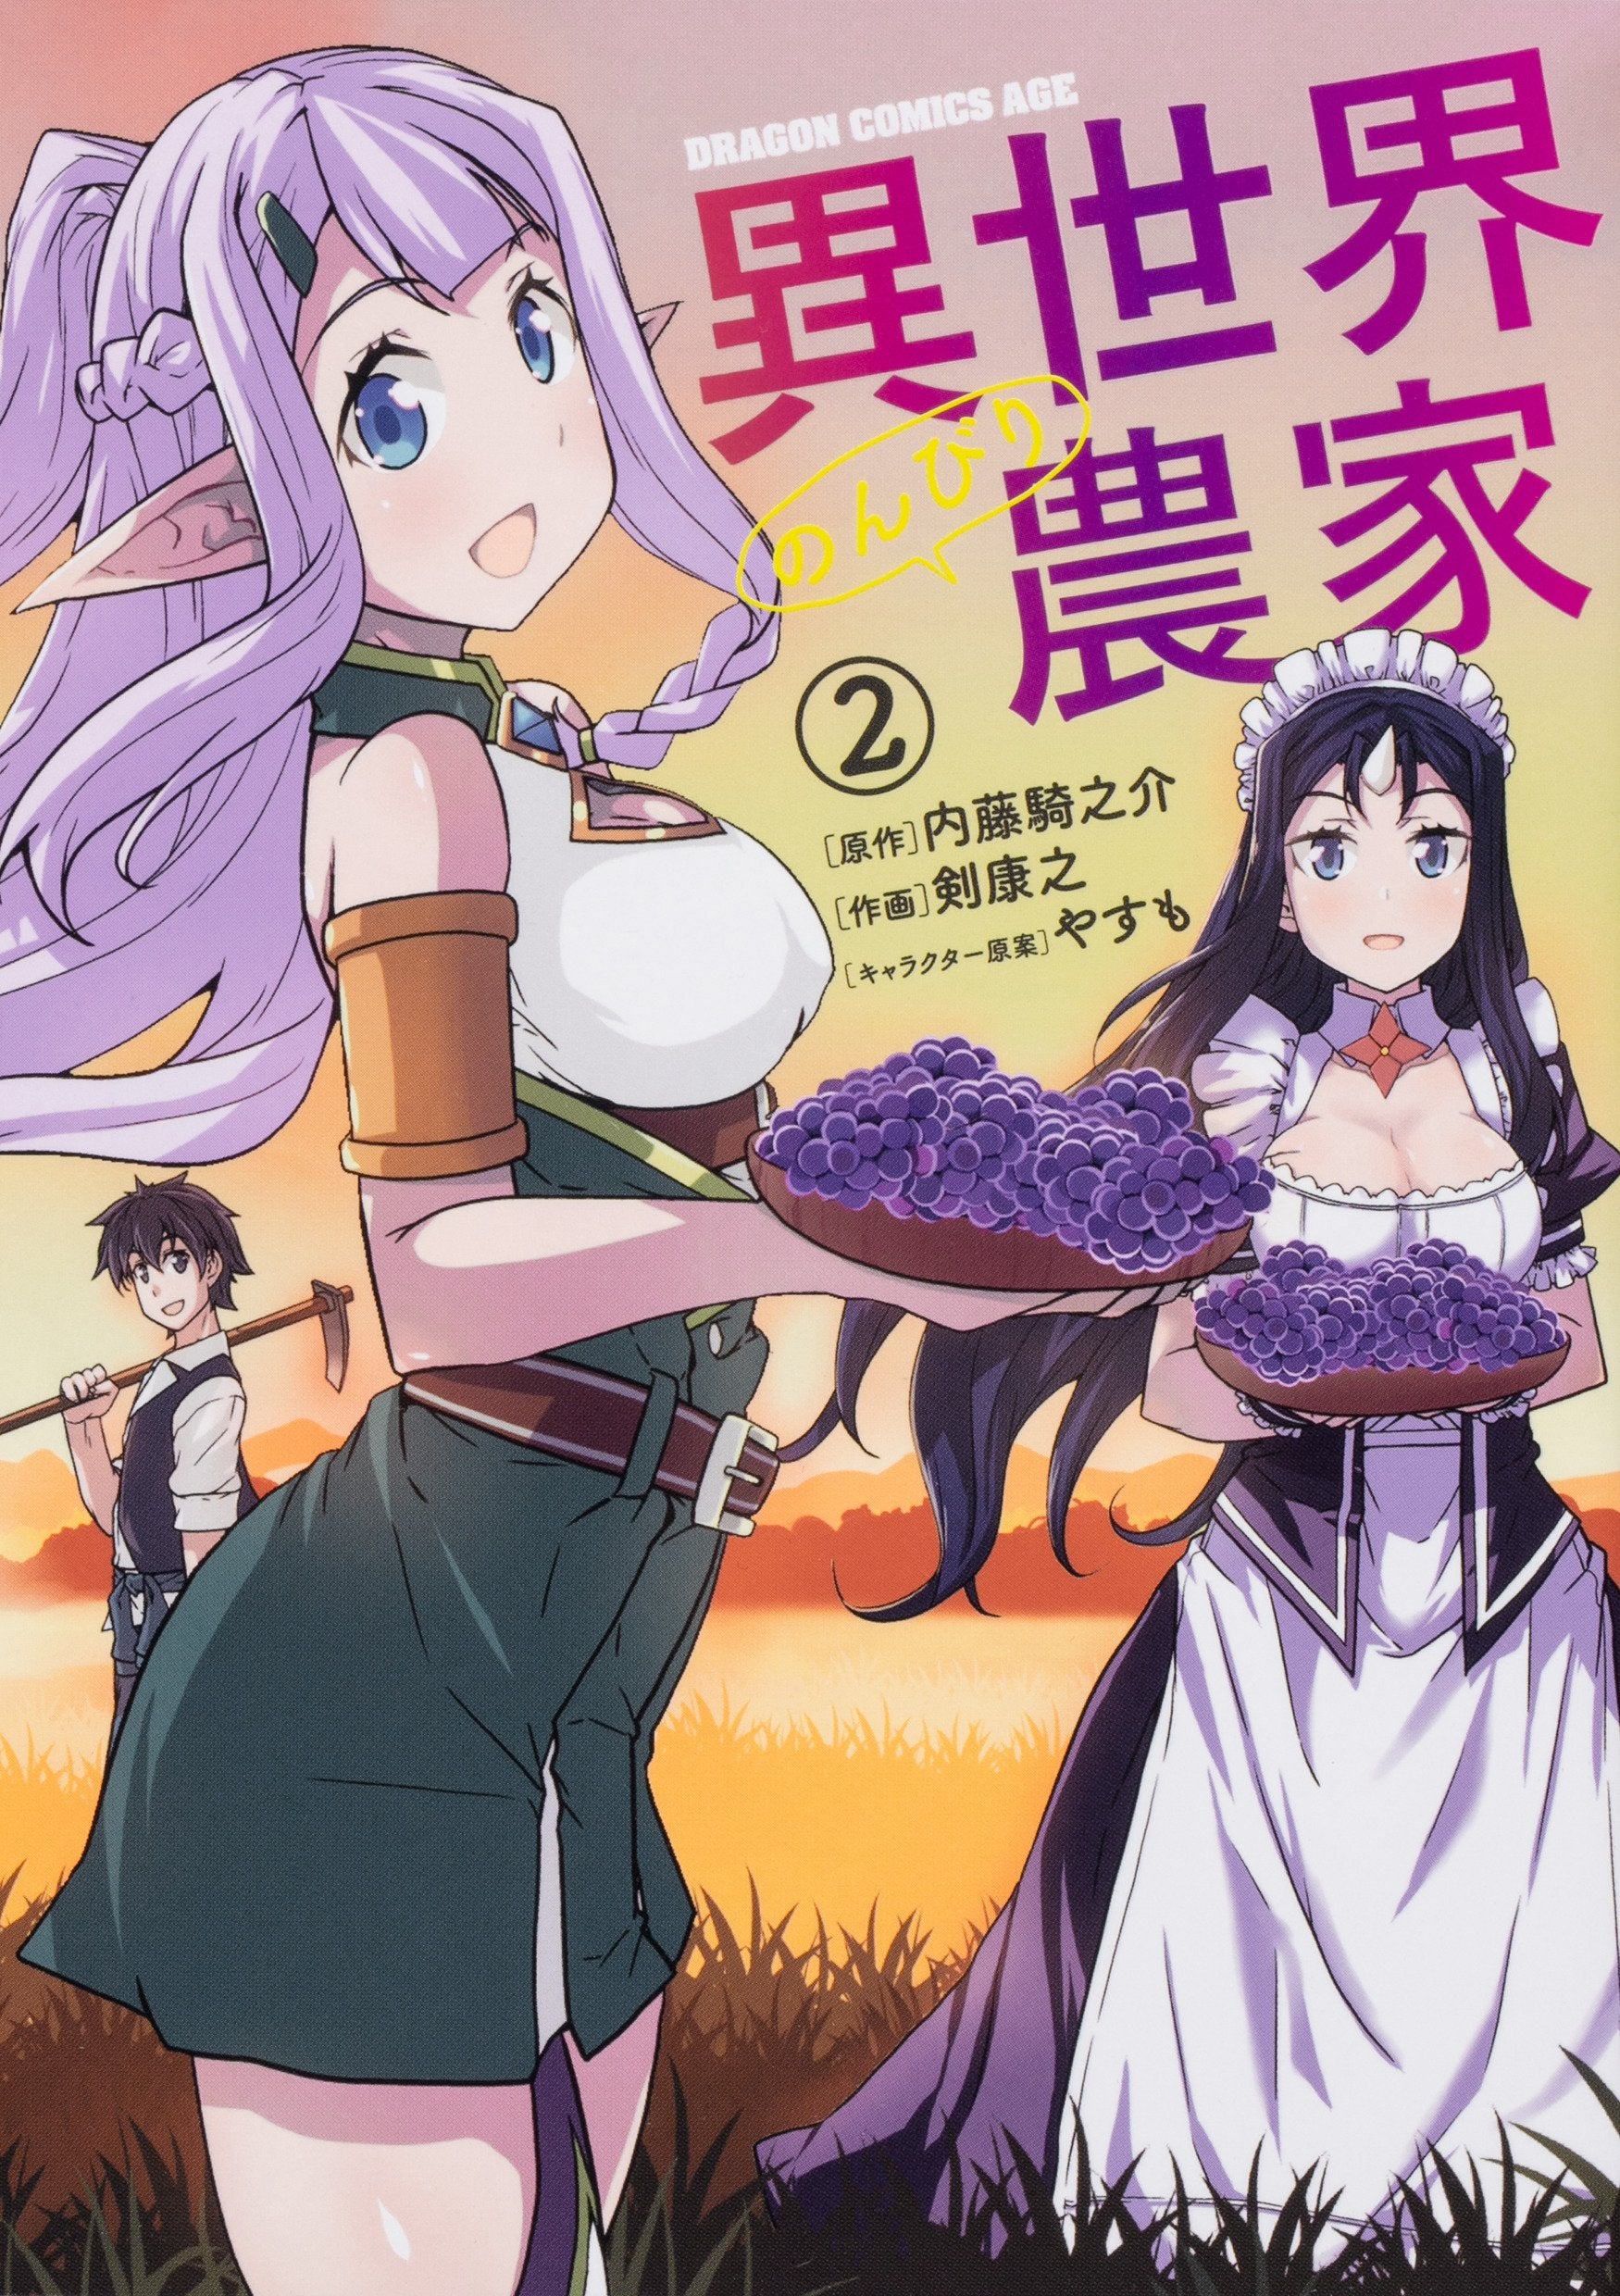 Comic: Farming Life in Another World 3 (Japan(Isekai nonbiri nouka - dragon  comics age (INN)) Col:JP-INN-03